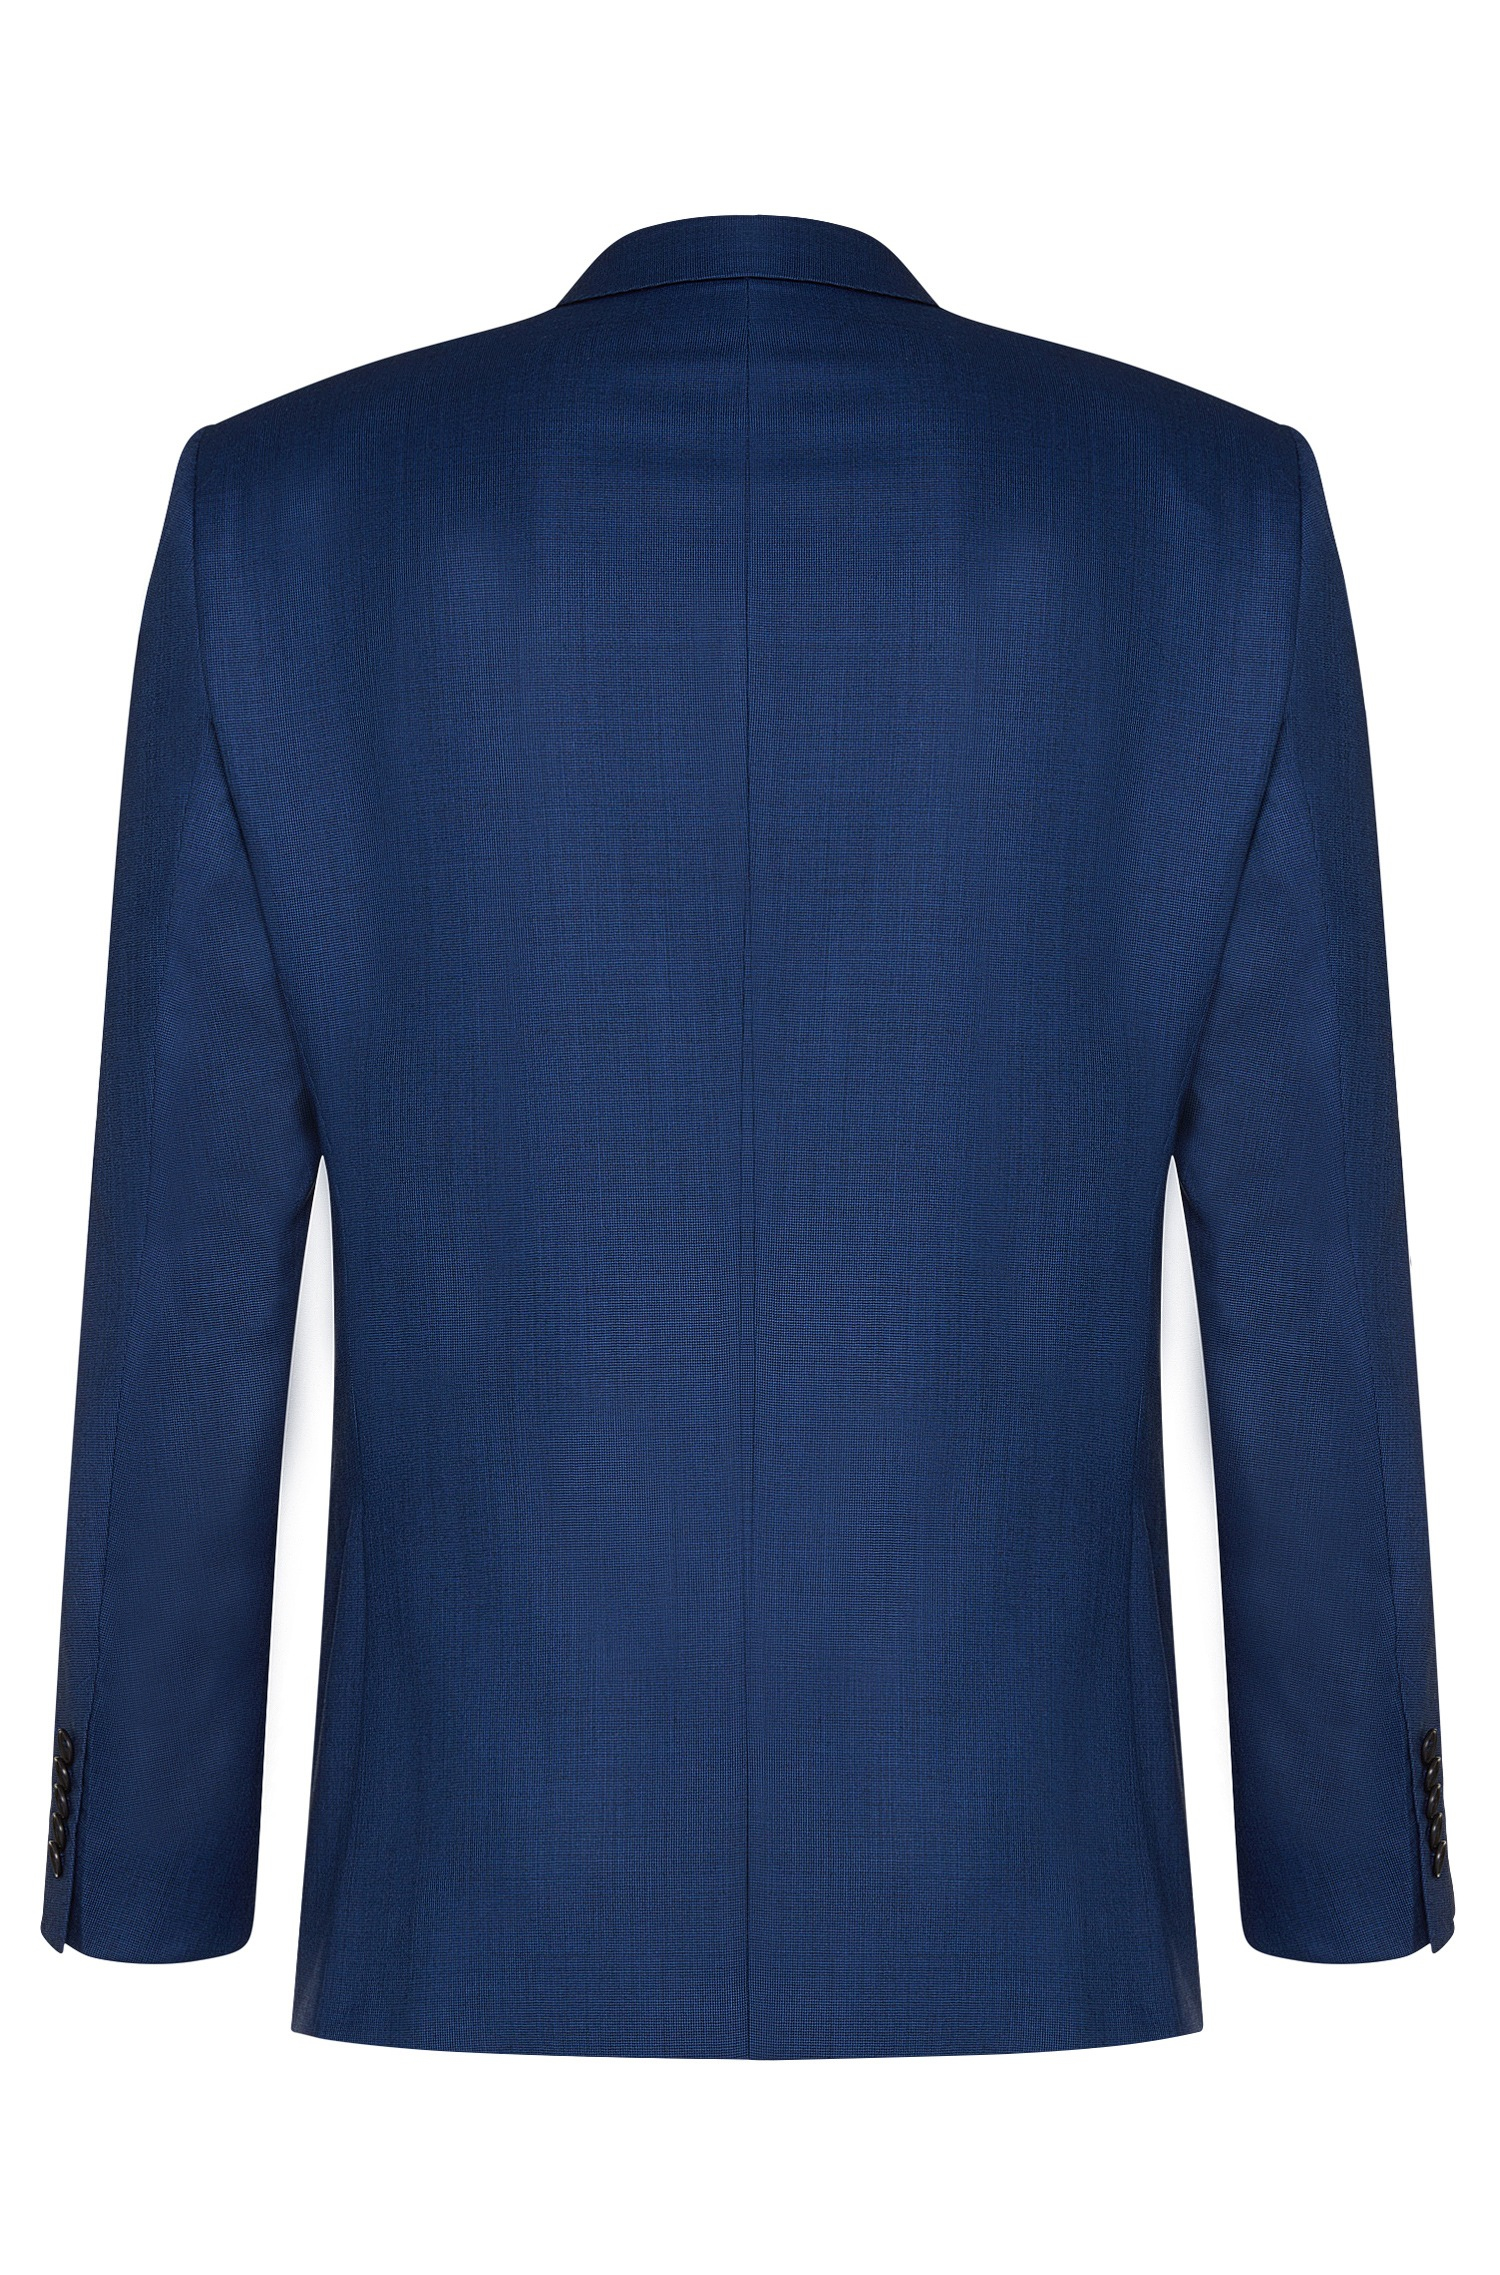 BOSS by HUGO BOSS 't-harvers/glover' | Slim Fit, Super 150 Italian Virgin  Wool Suit in Blue for Men - Lyst